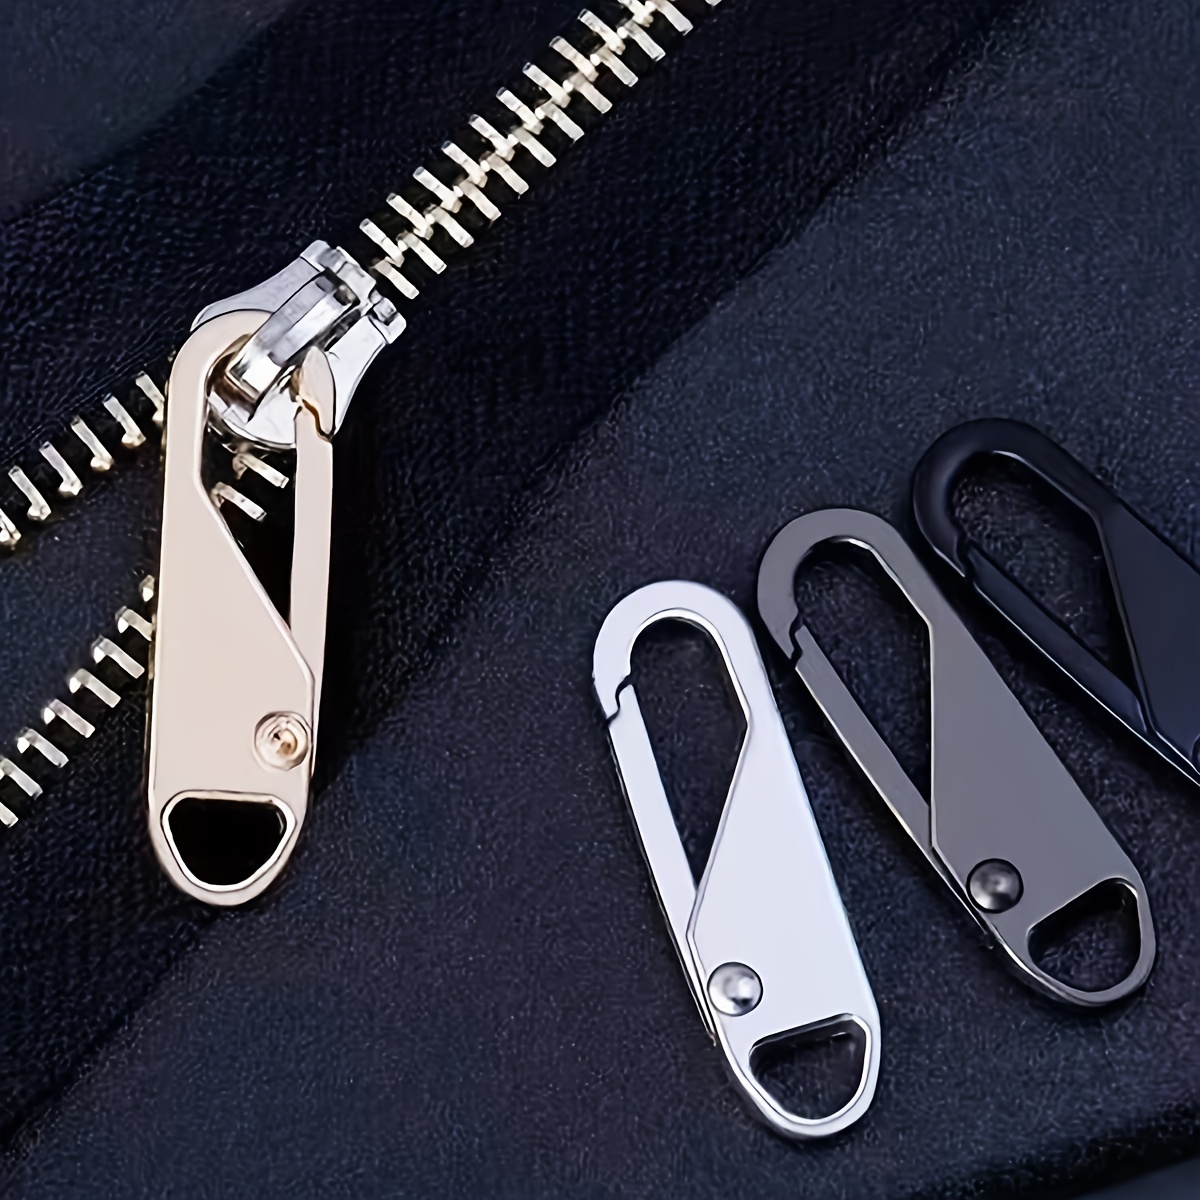 Zipper Slider Zipper Instant Zipper Repair Tool Kit Replacement